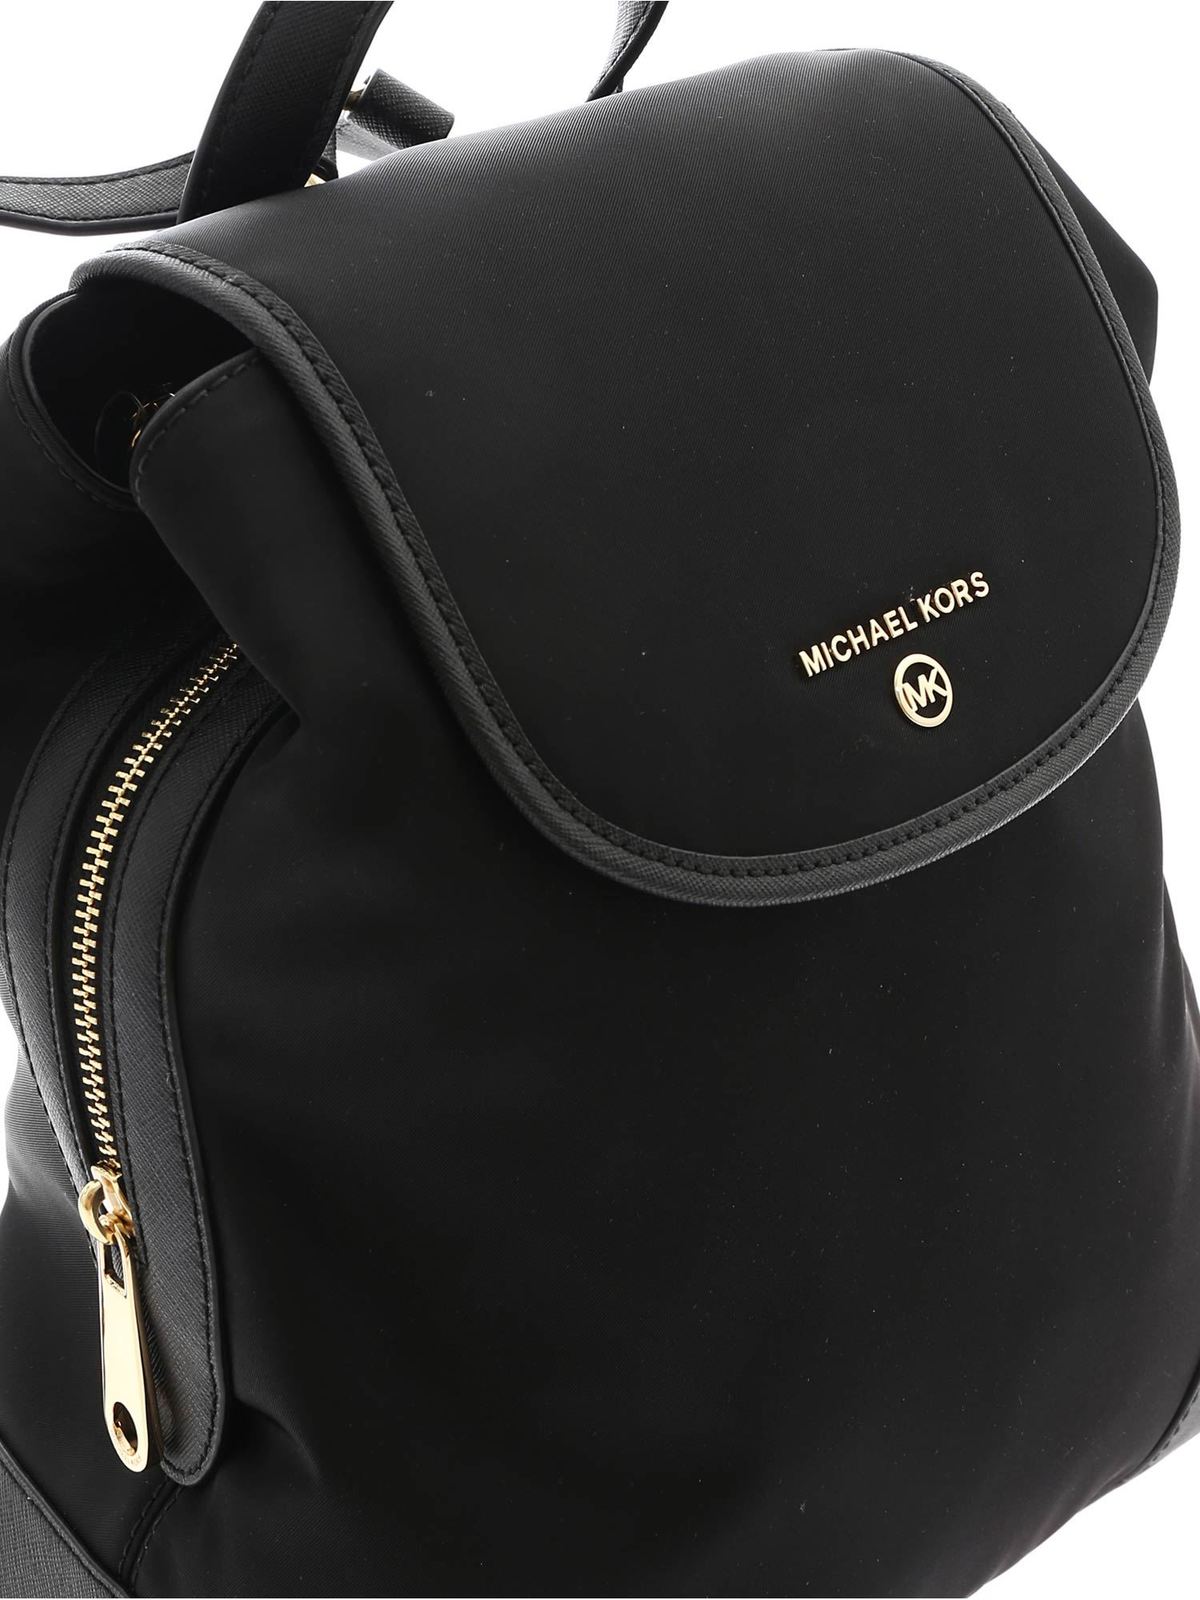 Michael Kors Raven Medium Pebbled Leather Backpack  Sand  eBay